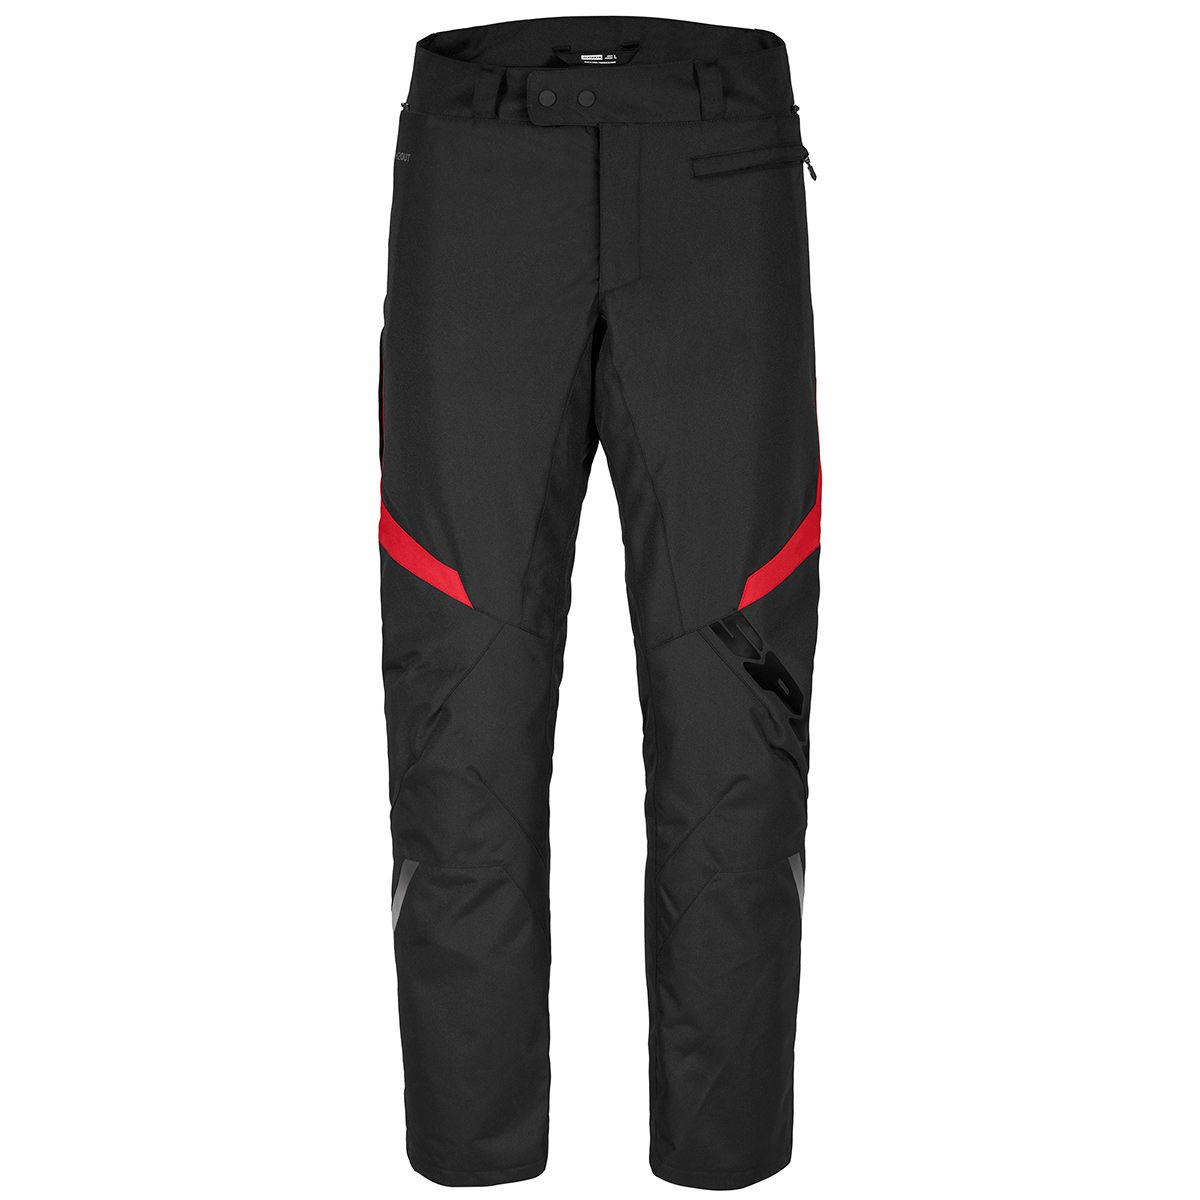 Image of Spidi Sportmaster Pants Black Red Size M ID 8030161478204